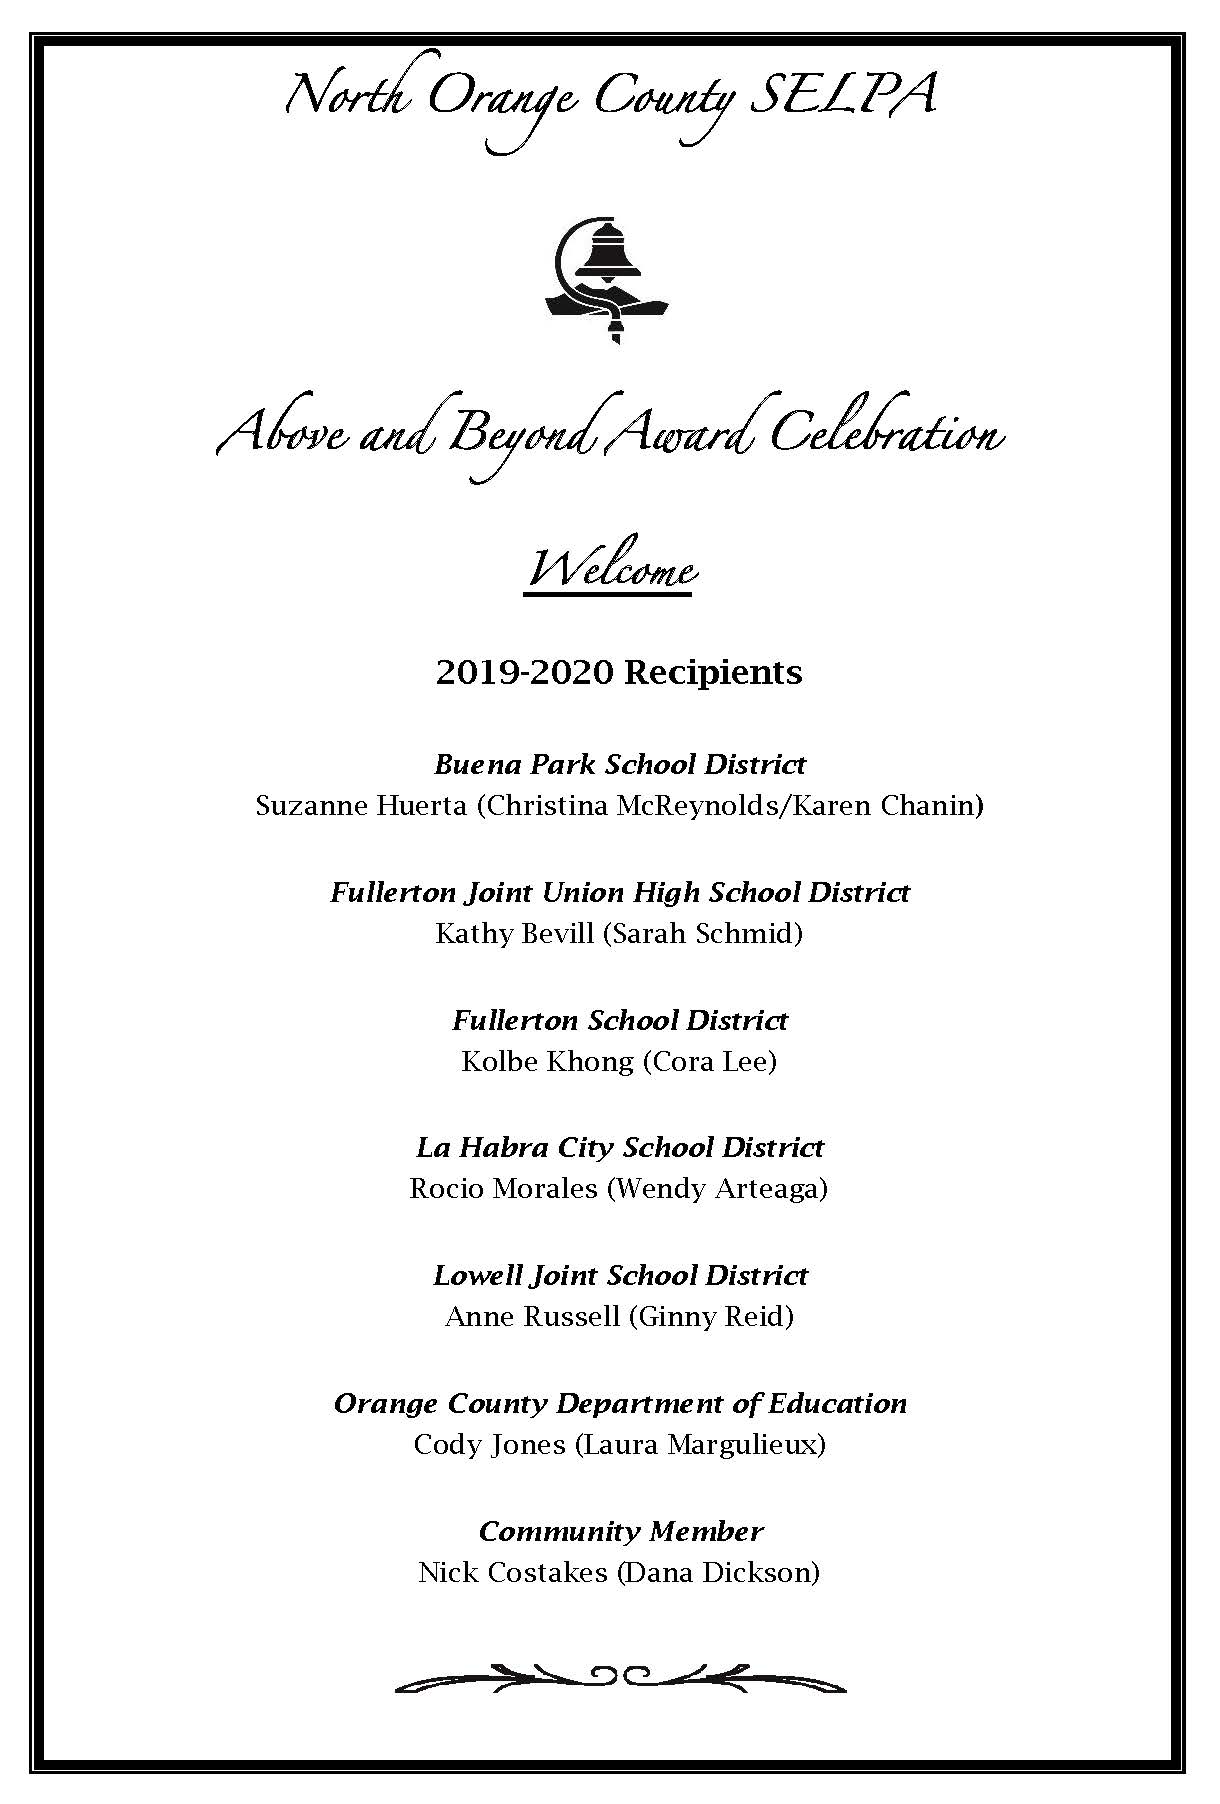 Above and Beyond Award - 2019-2020 Recipients.jpg